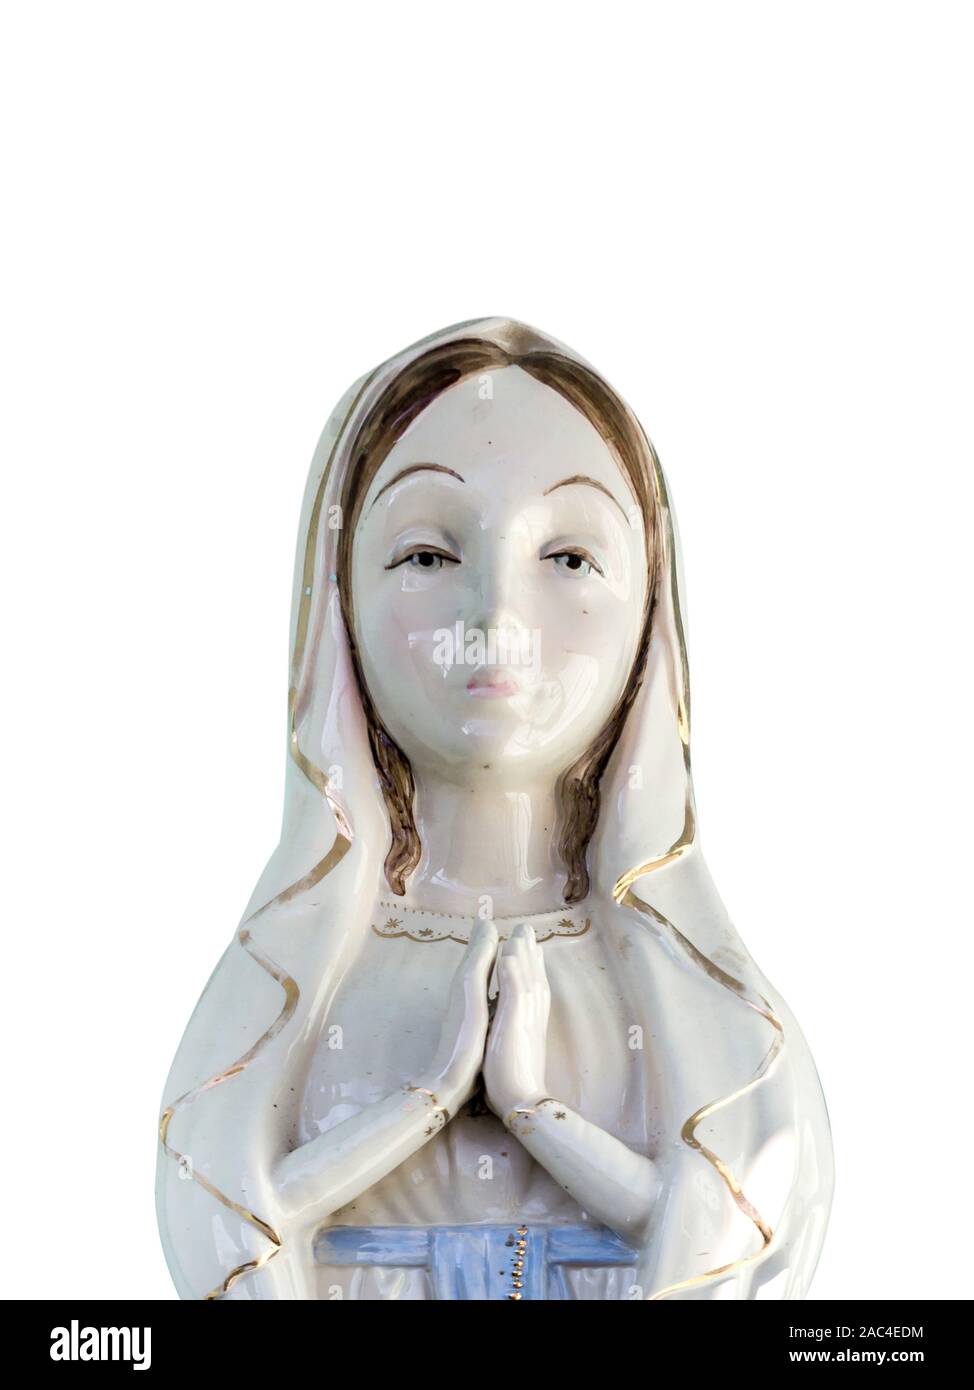 Our Lady vintage porcelain statue. Mock up copy space. Stock Photo